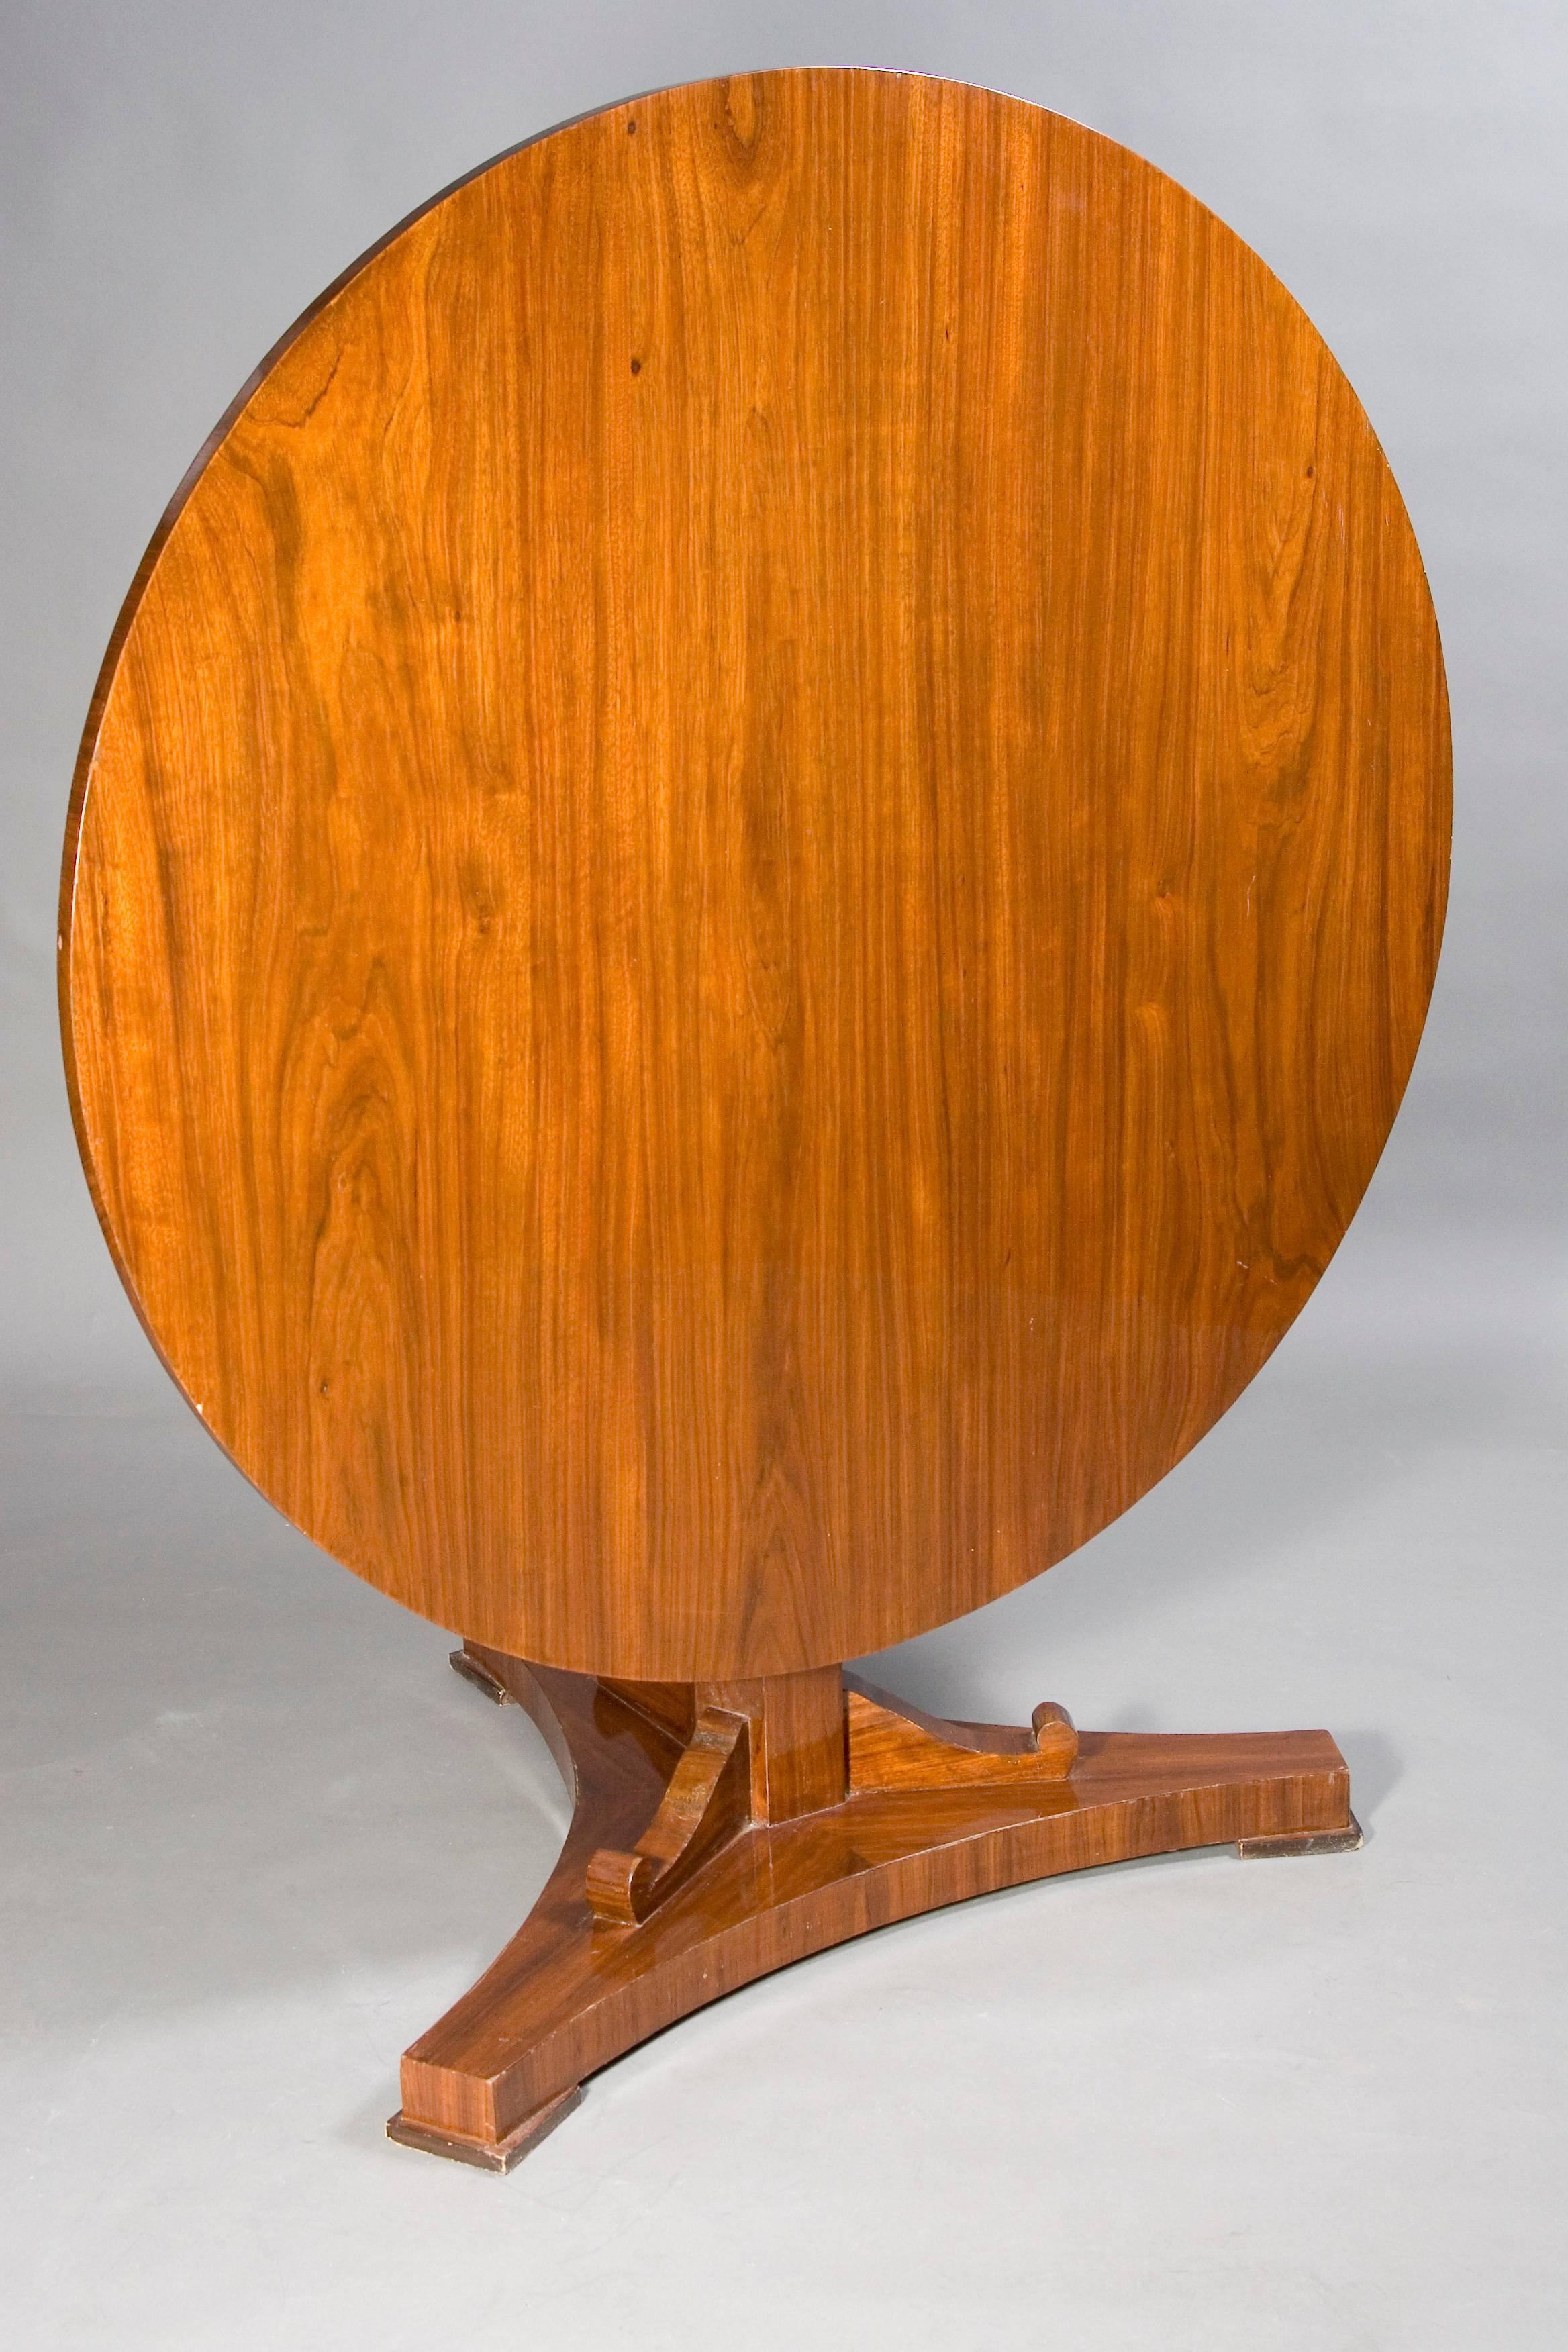 20th Century Rare Round Folding Table in Biedermeier Style